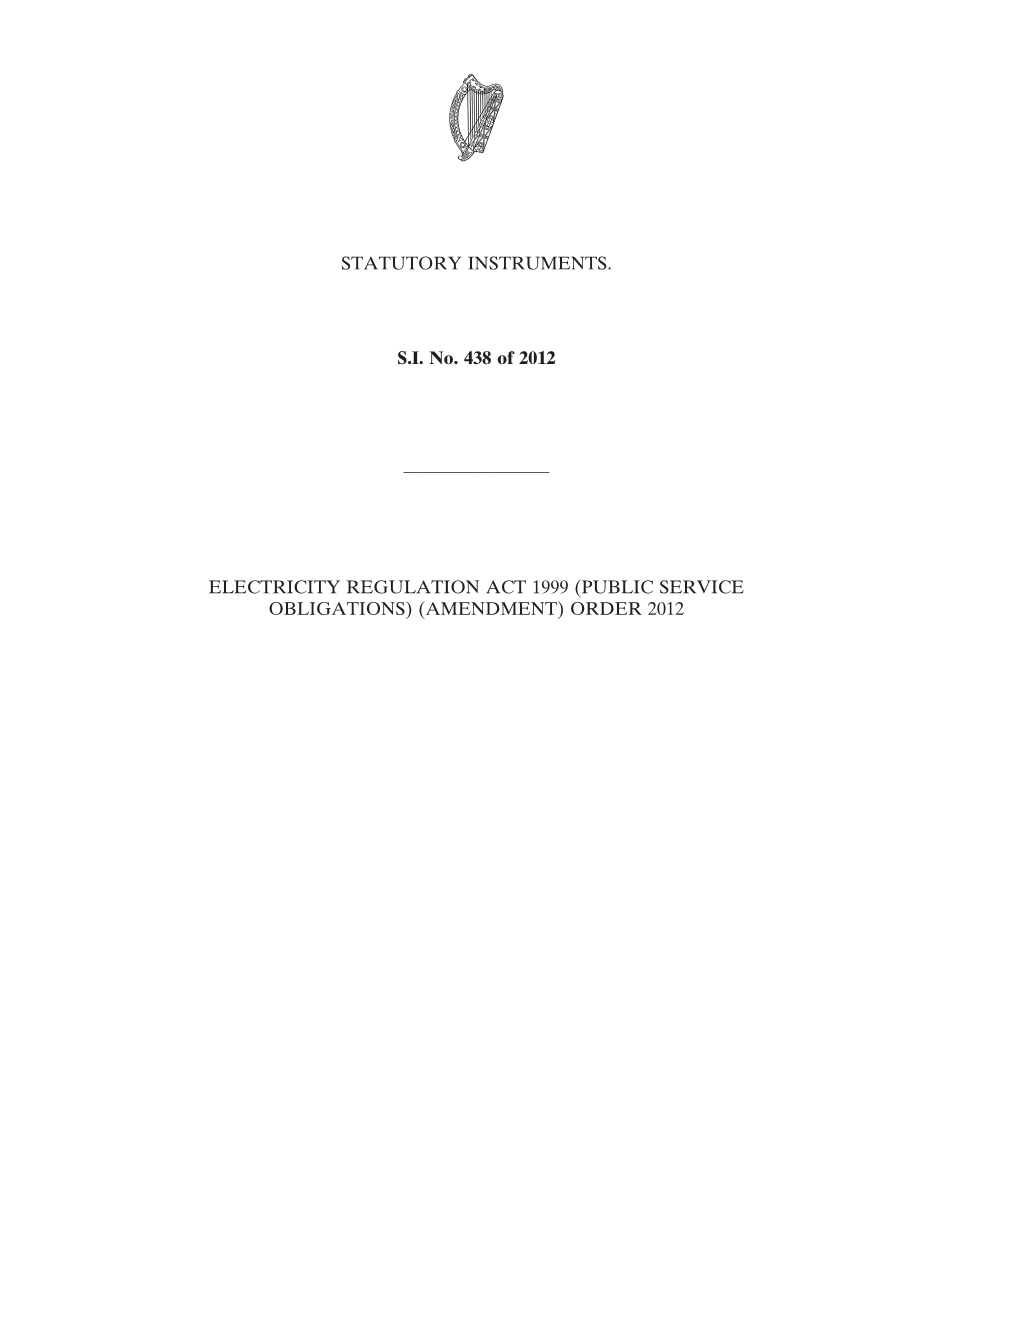 STATUTORY INSTRUMENTS. S.I. No. 438 of 2012 ———————— ELECTRICITY REGULATION ACT 1999 (PUBLIC SERVICE OBLIGATIONS